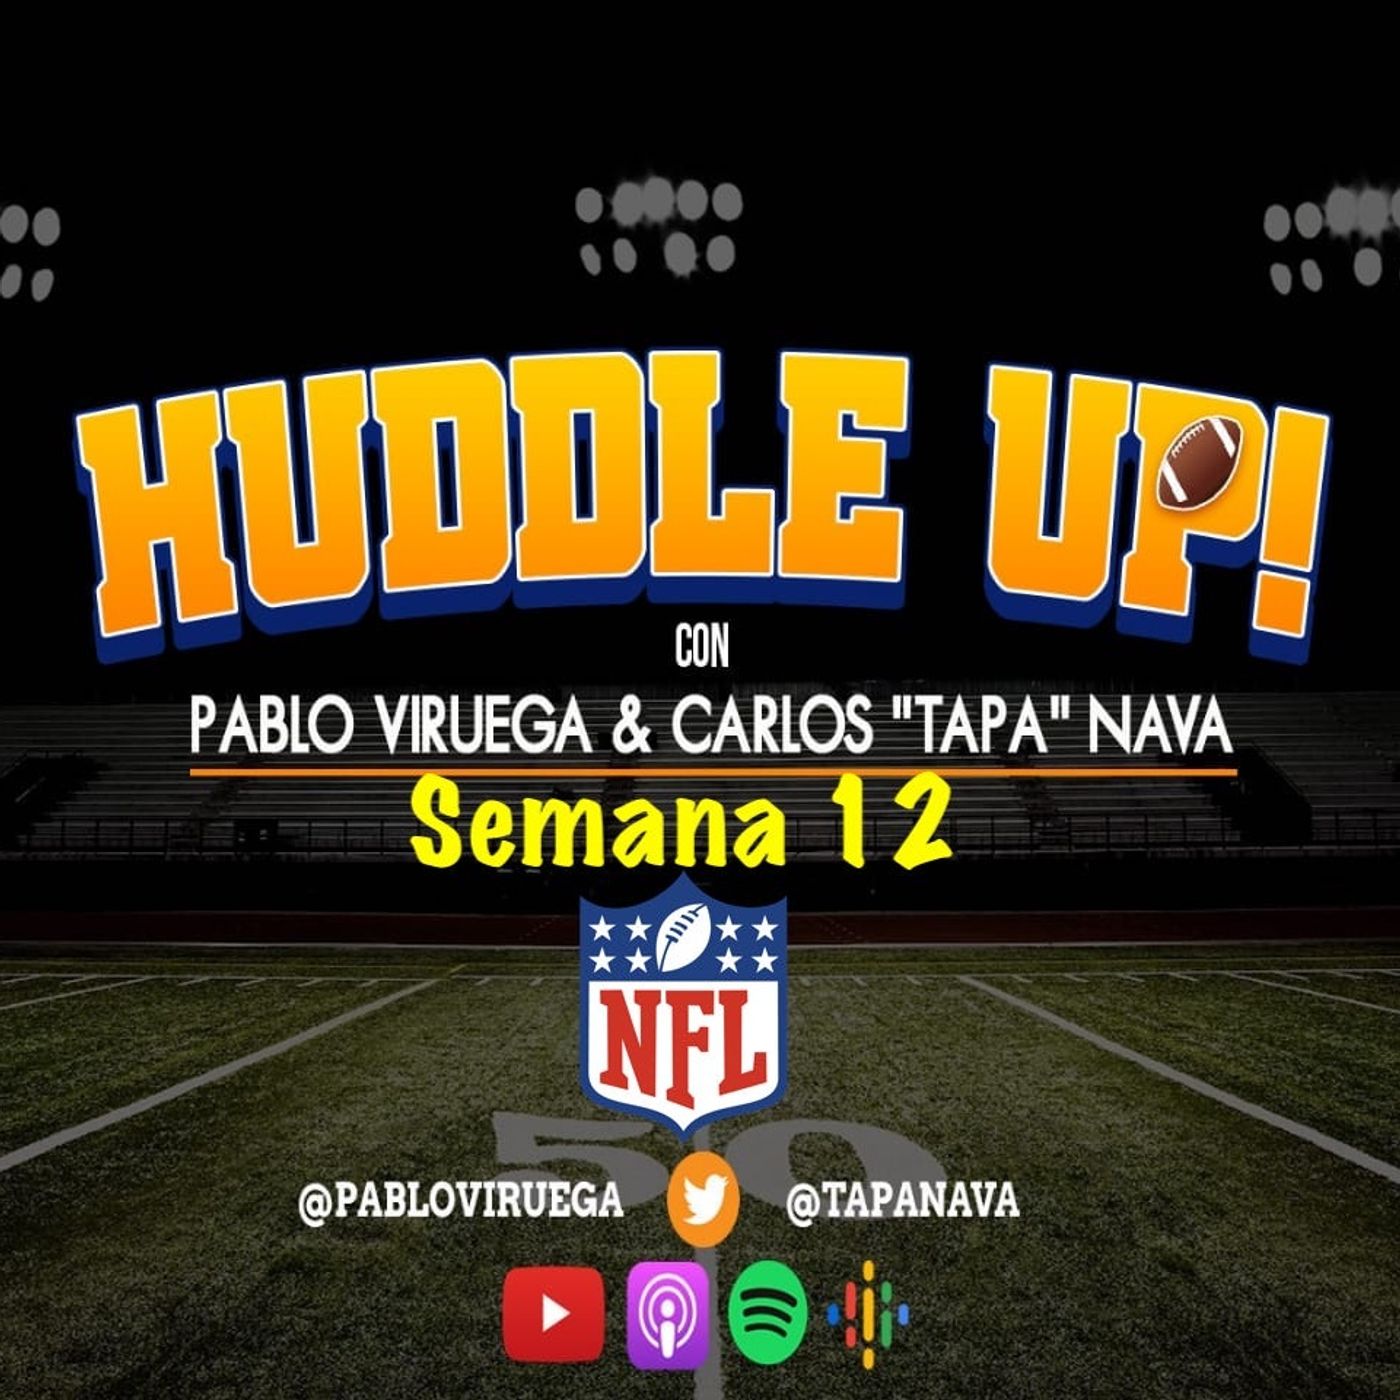 #HuddleUP Semana 12 #NFL Resultados #Thanksgiving Previo & Picks @TapaNava y @PabloViruega